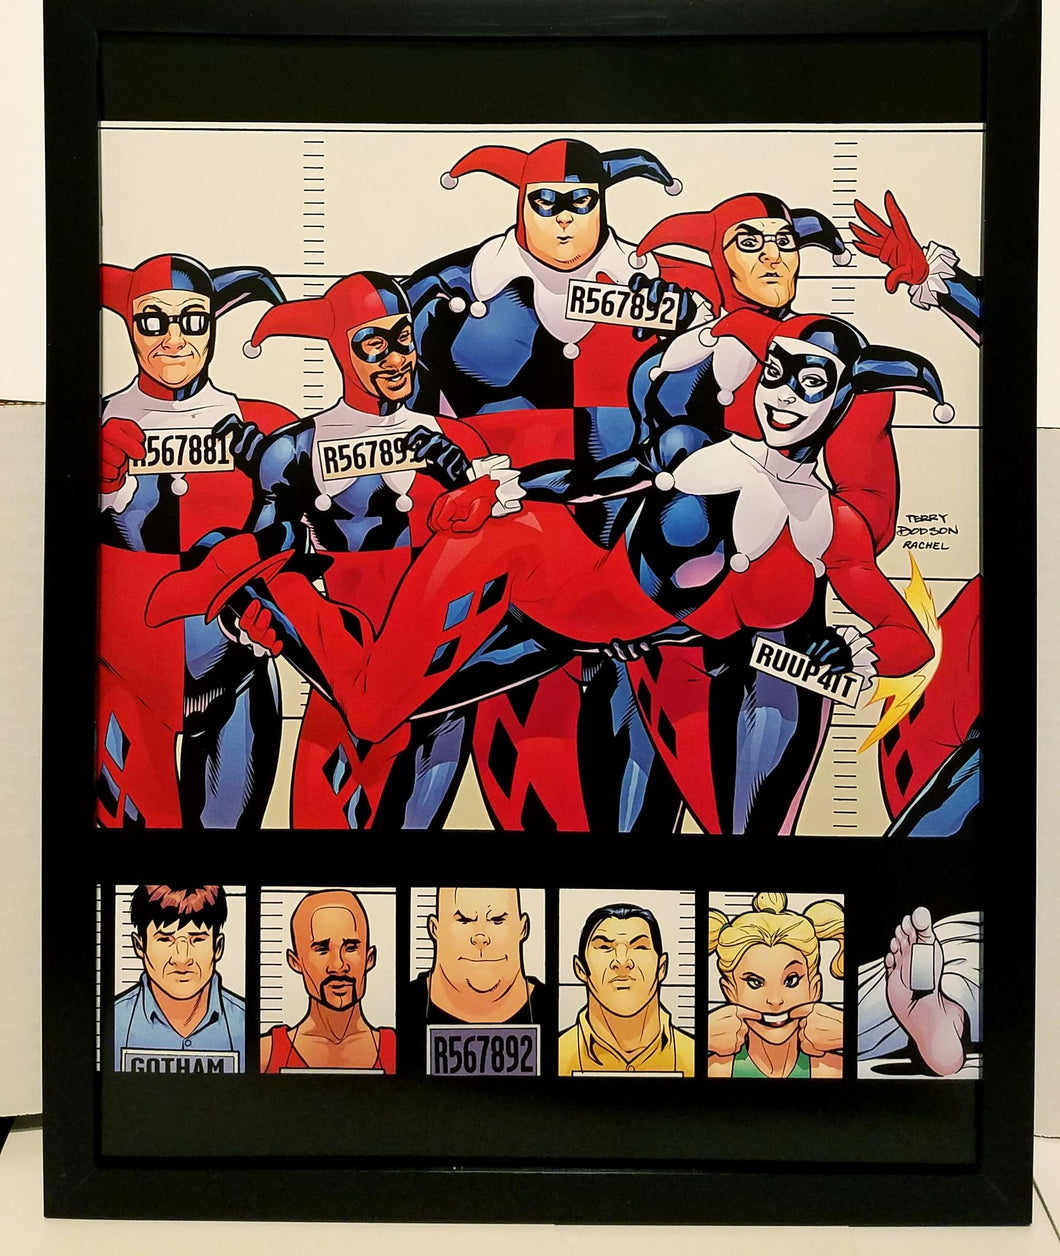 Harley Quinn by Terry Dodson 11x14 FRAMED DC Comics Art Print Poster